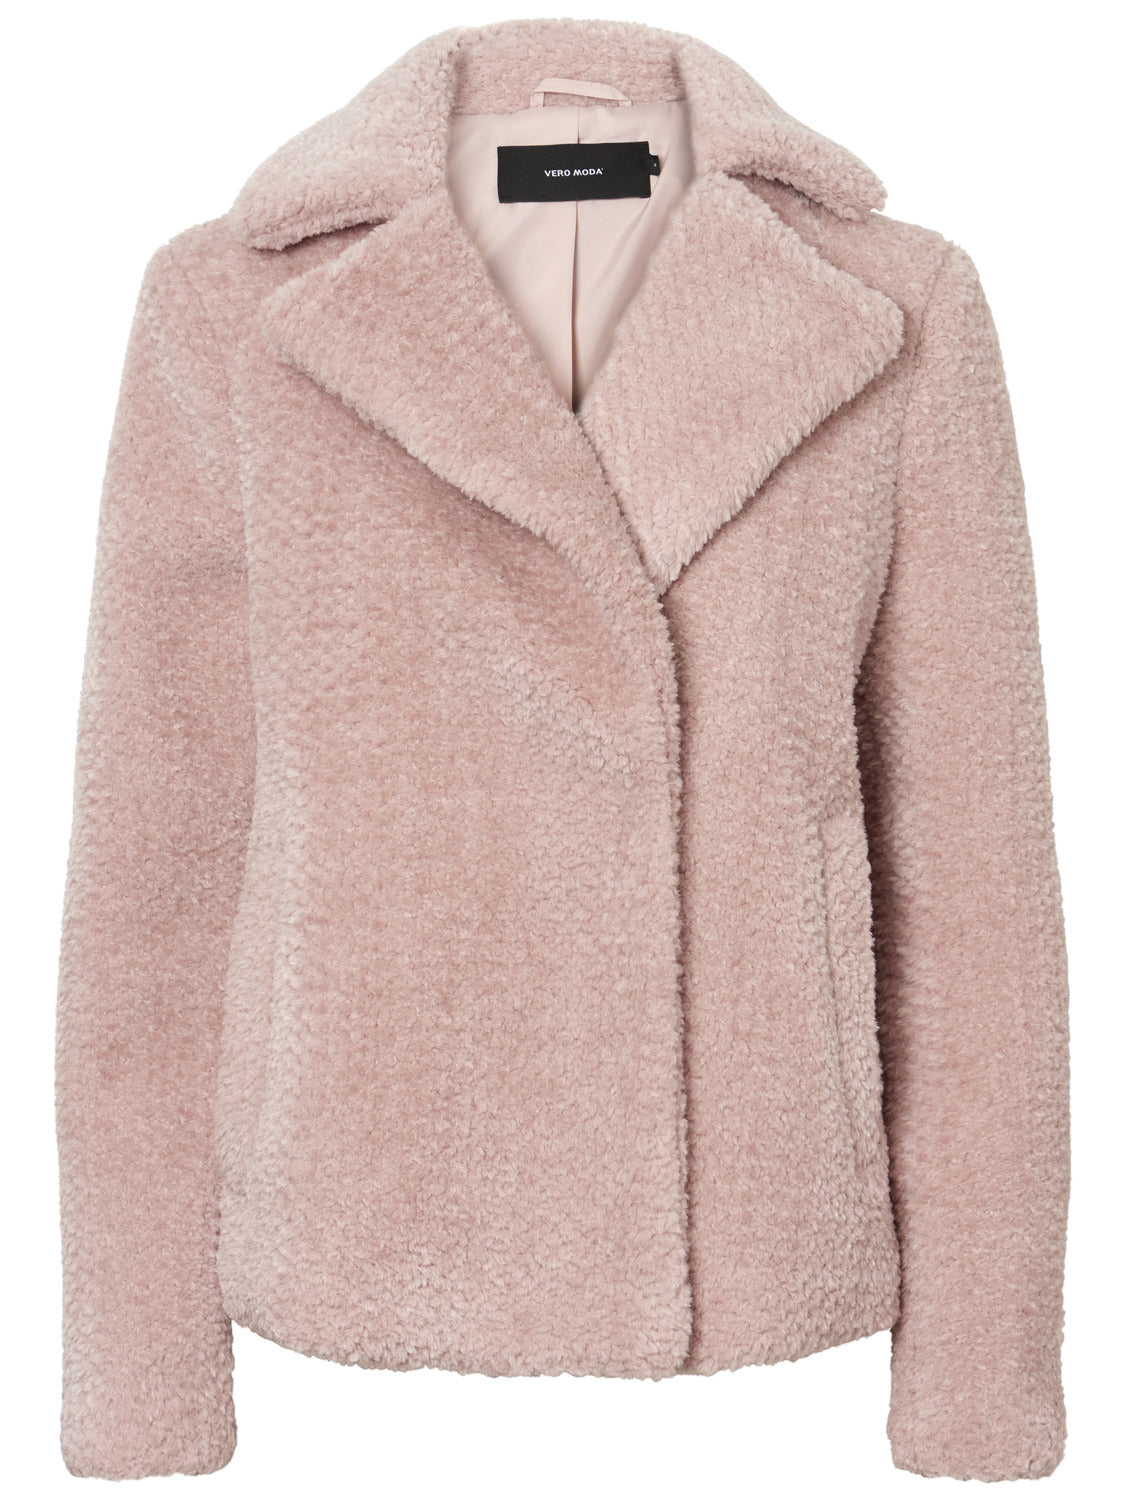 short pink faux fur jacket